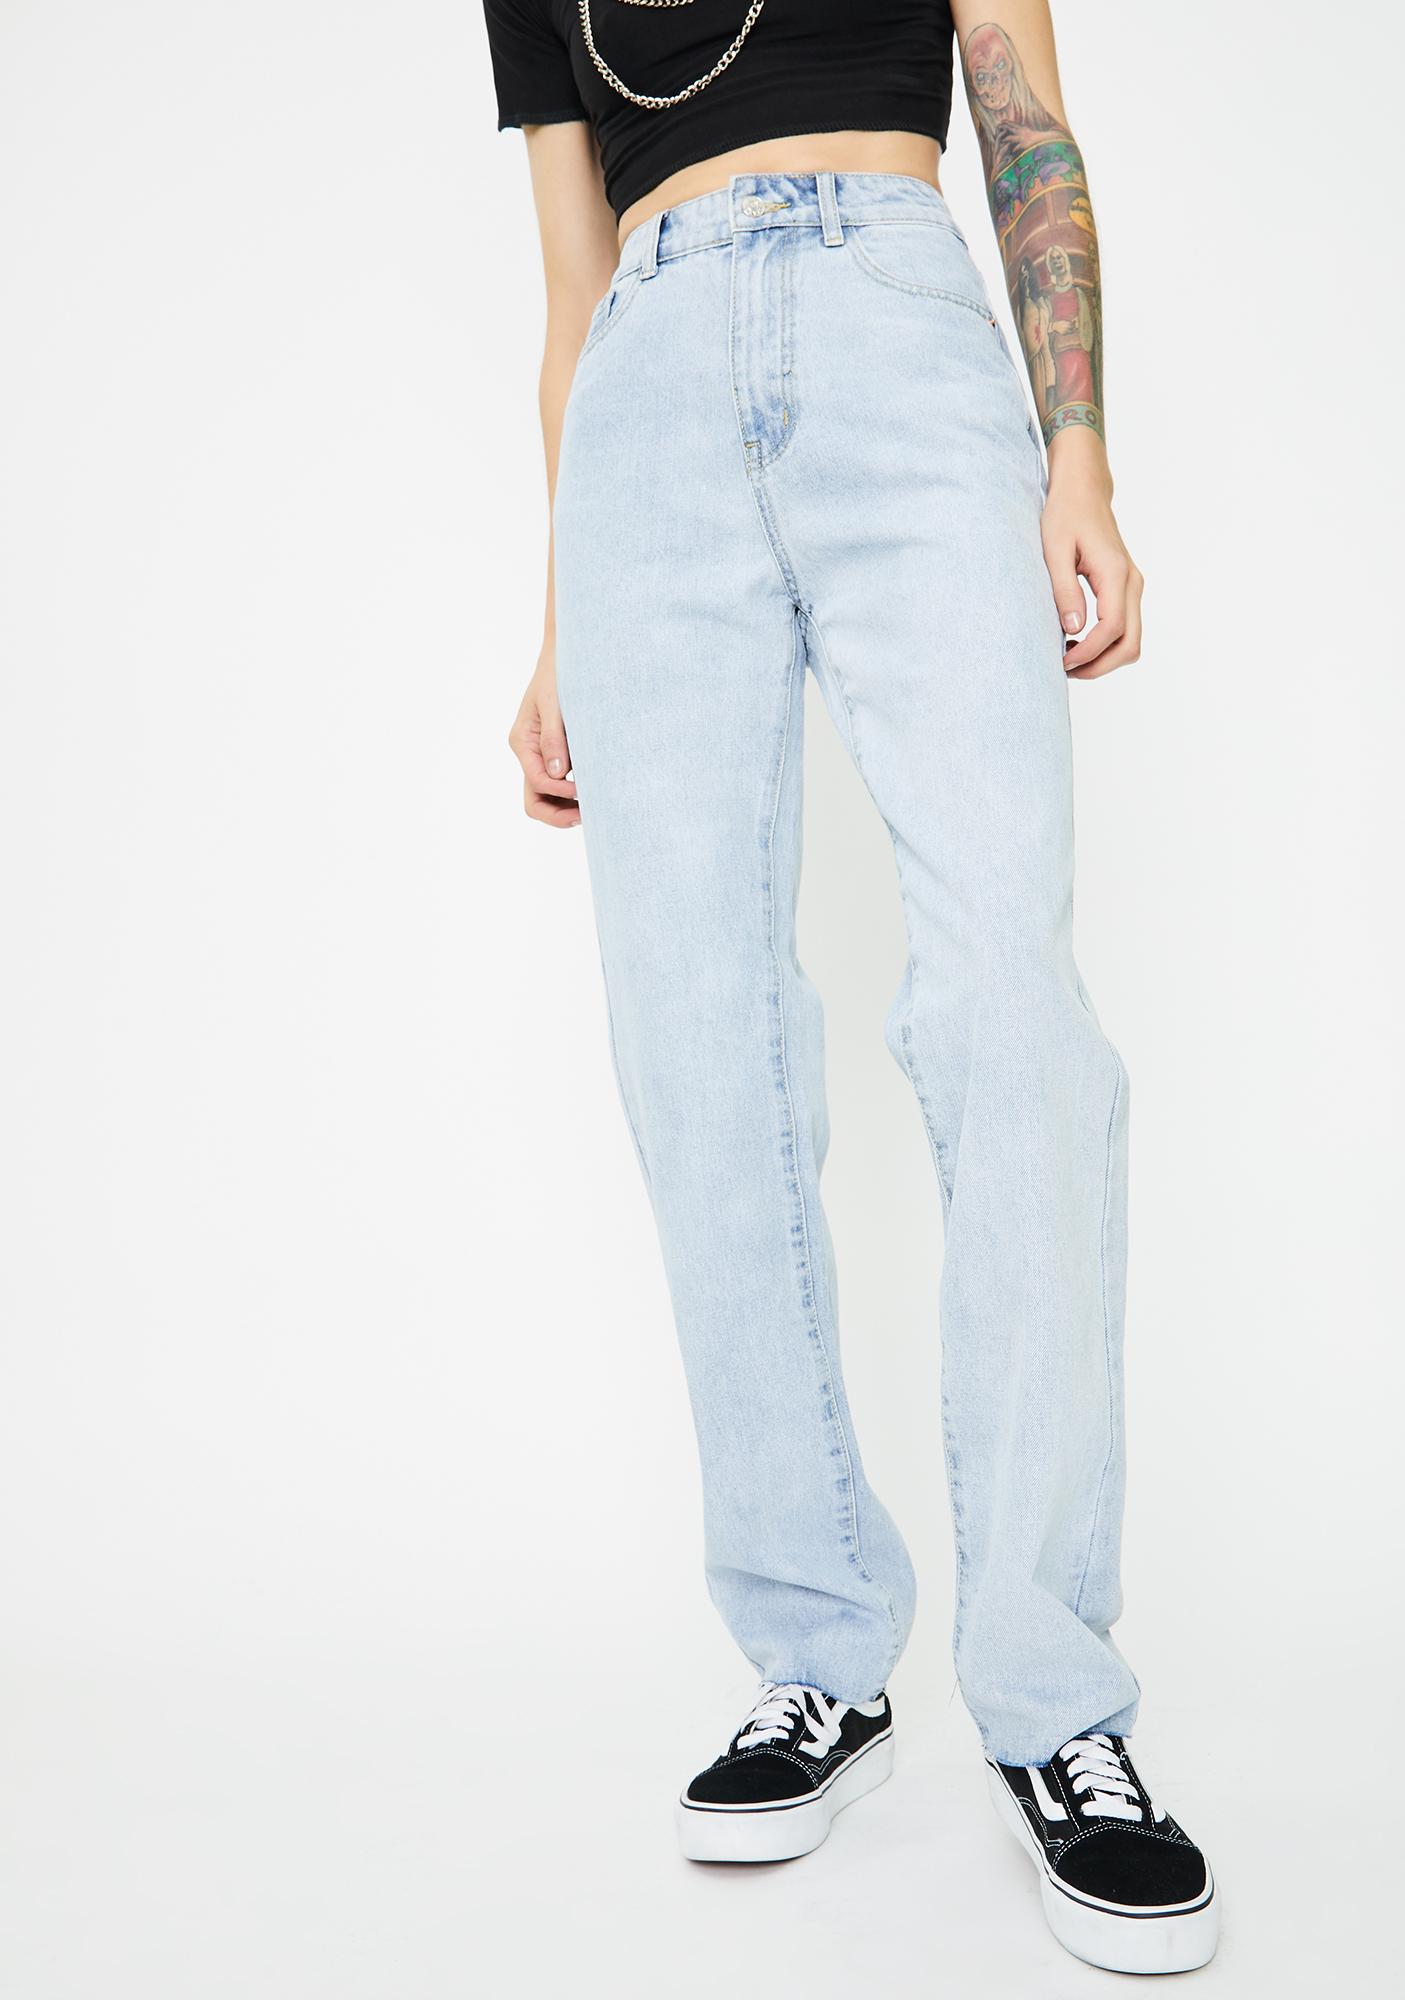 h&m womens jeans sale